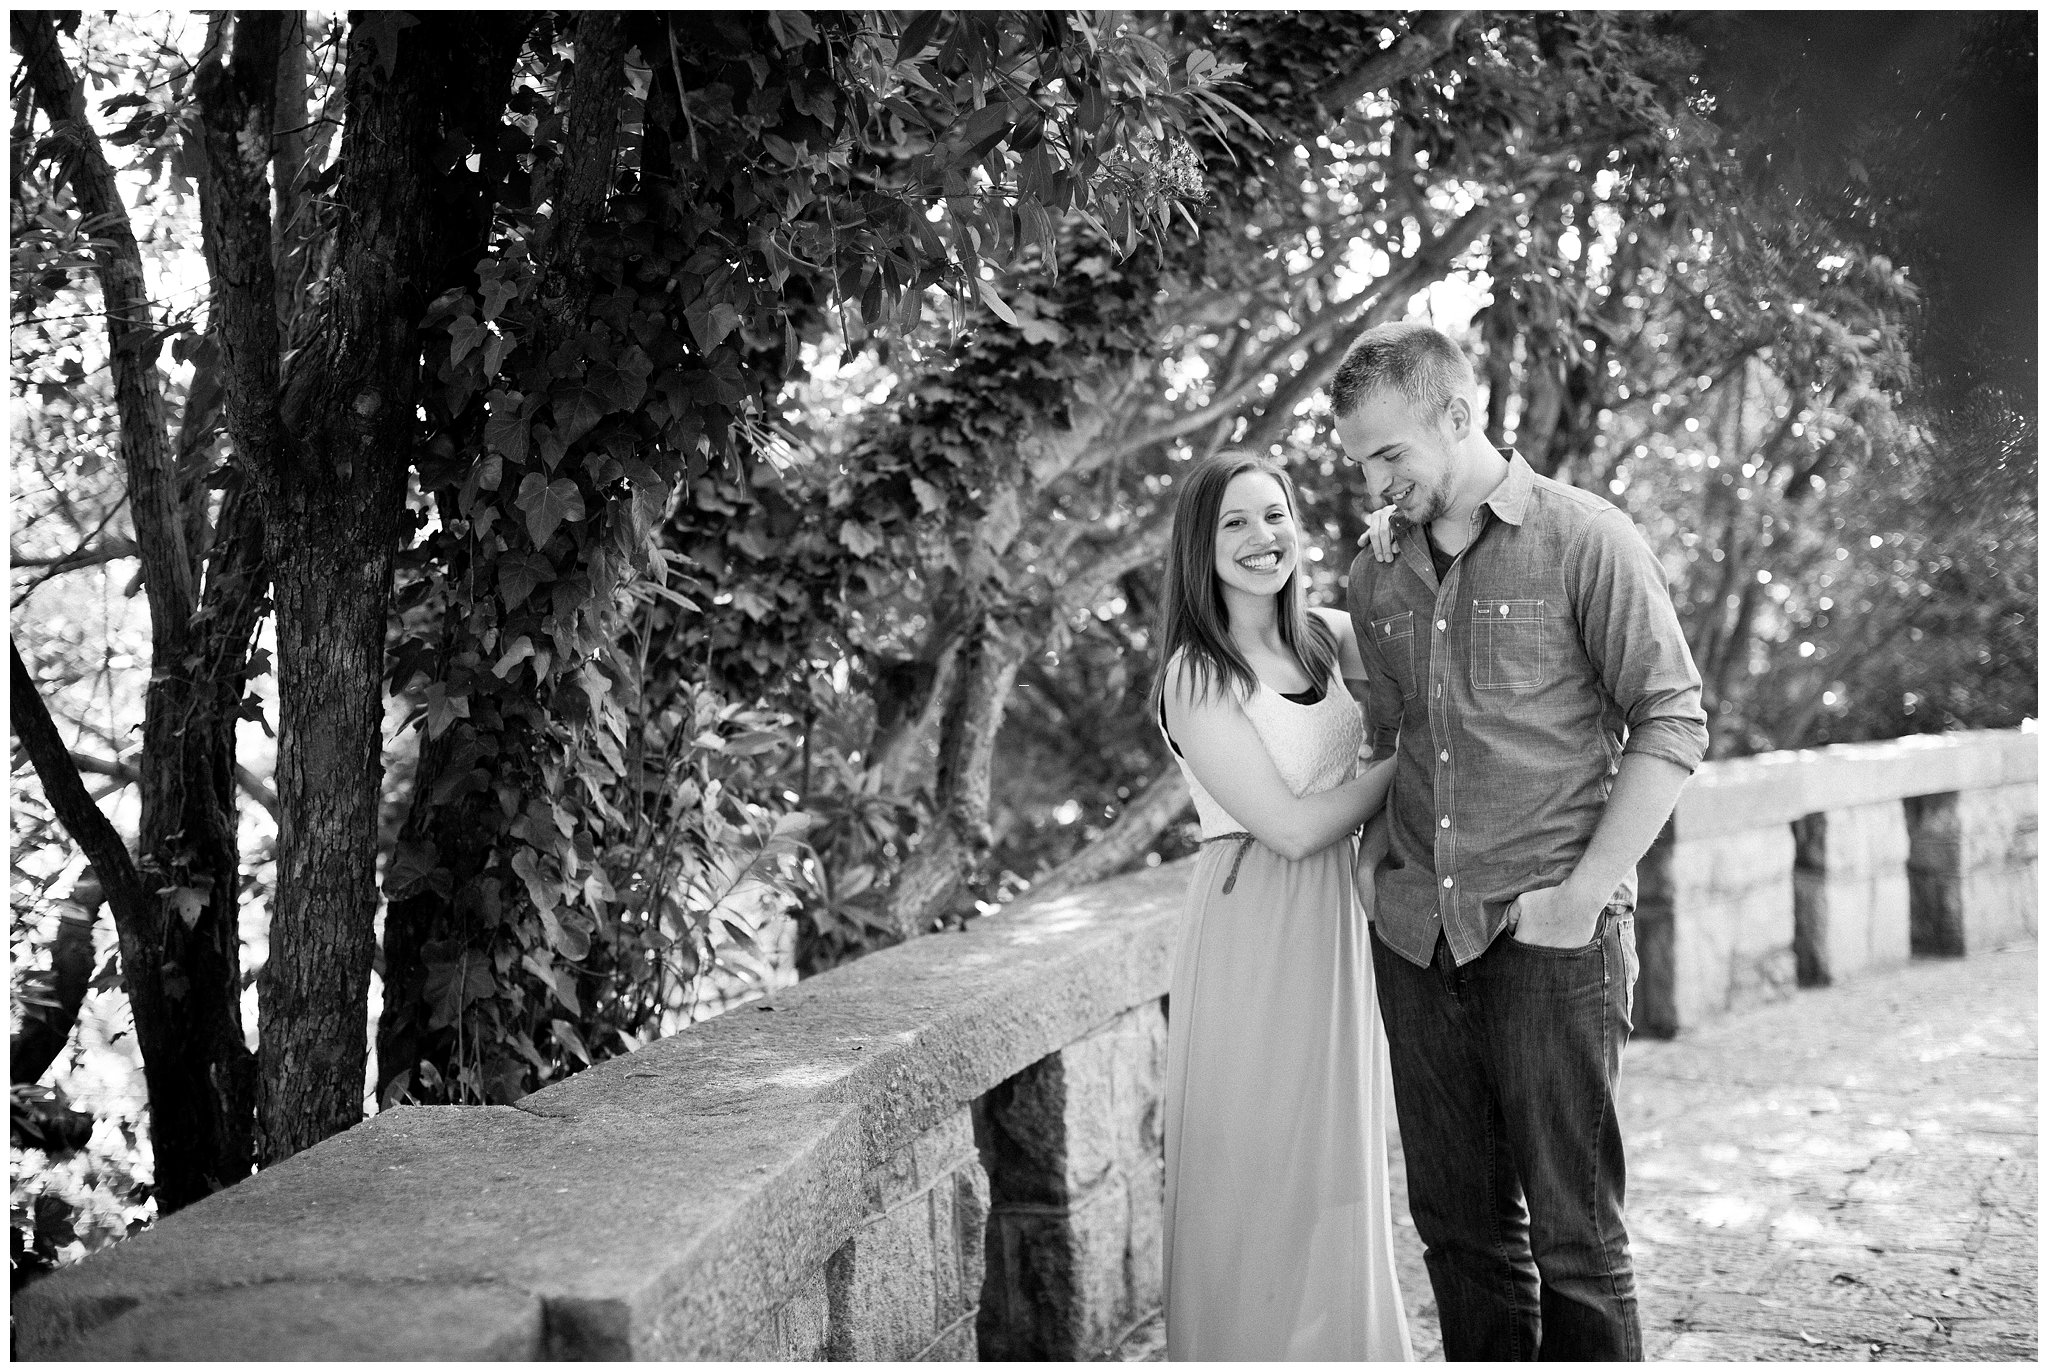 Maymont Richmond Engagement Session Engaged Couple Garden Park Gazebo Fairytale Love